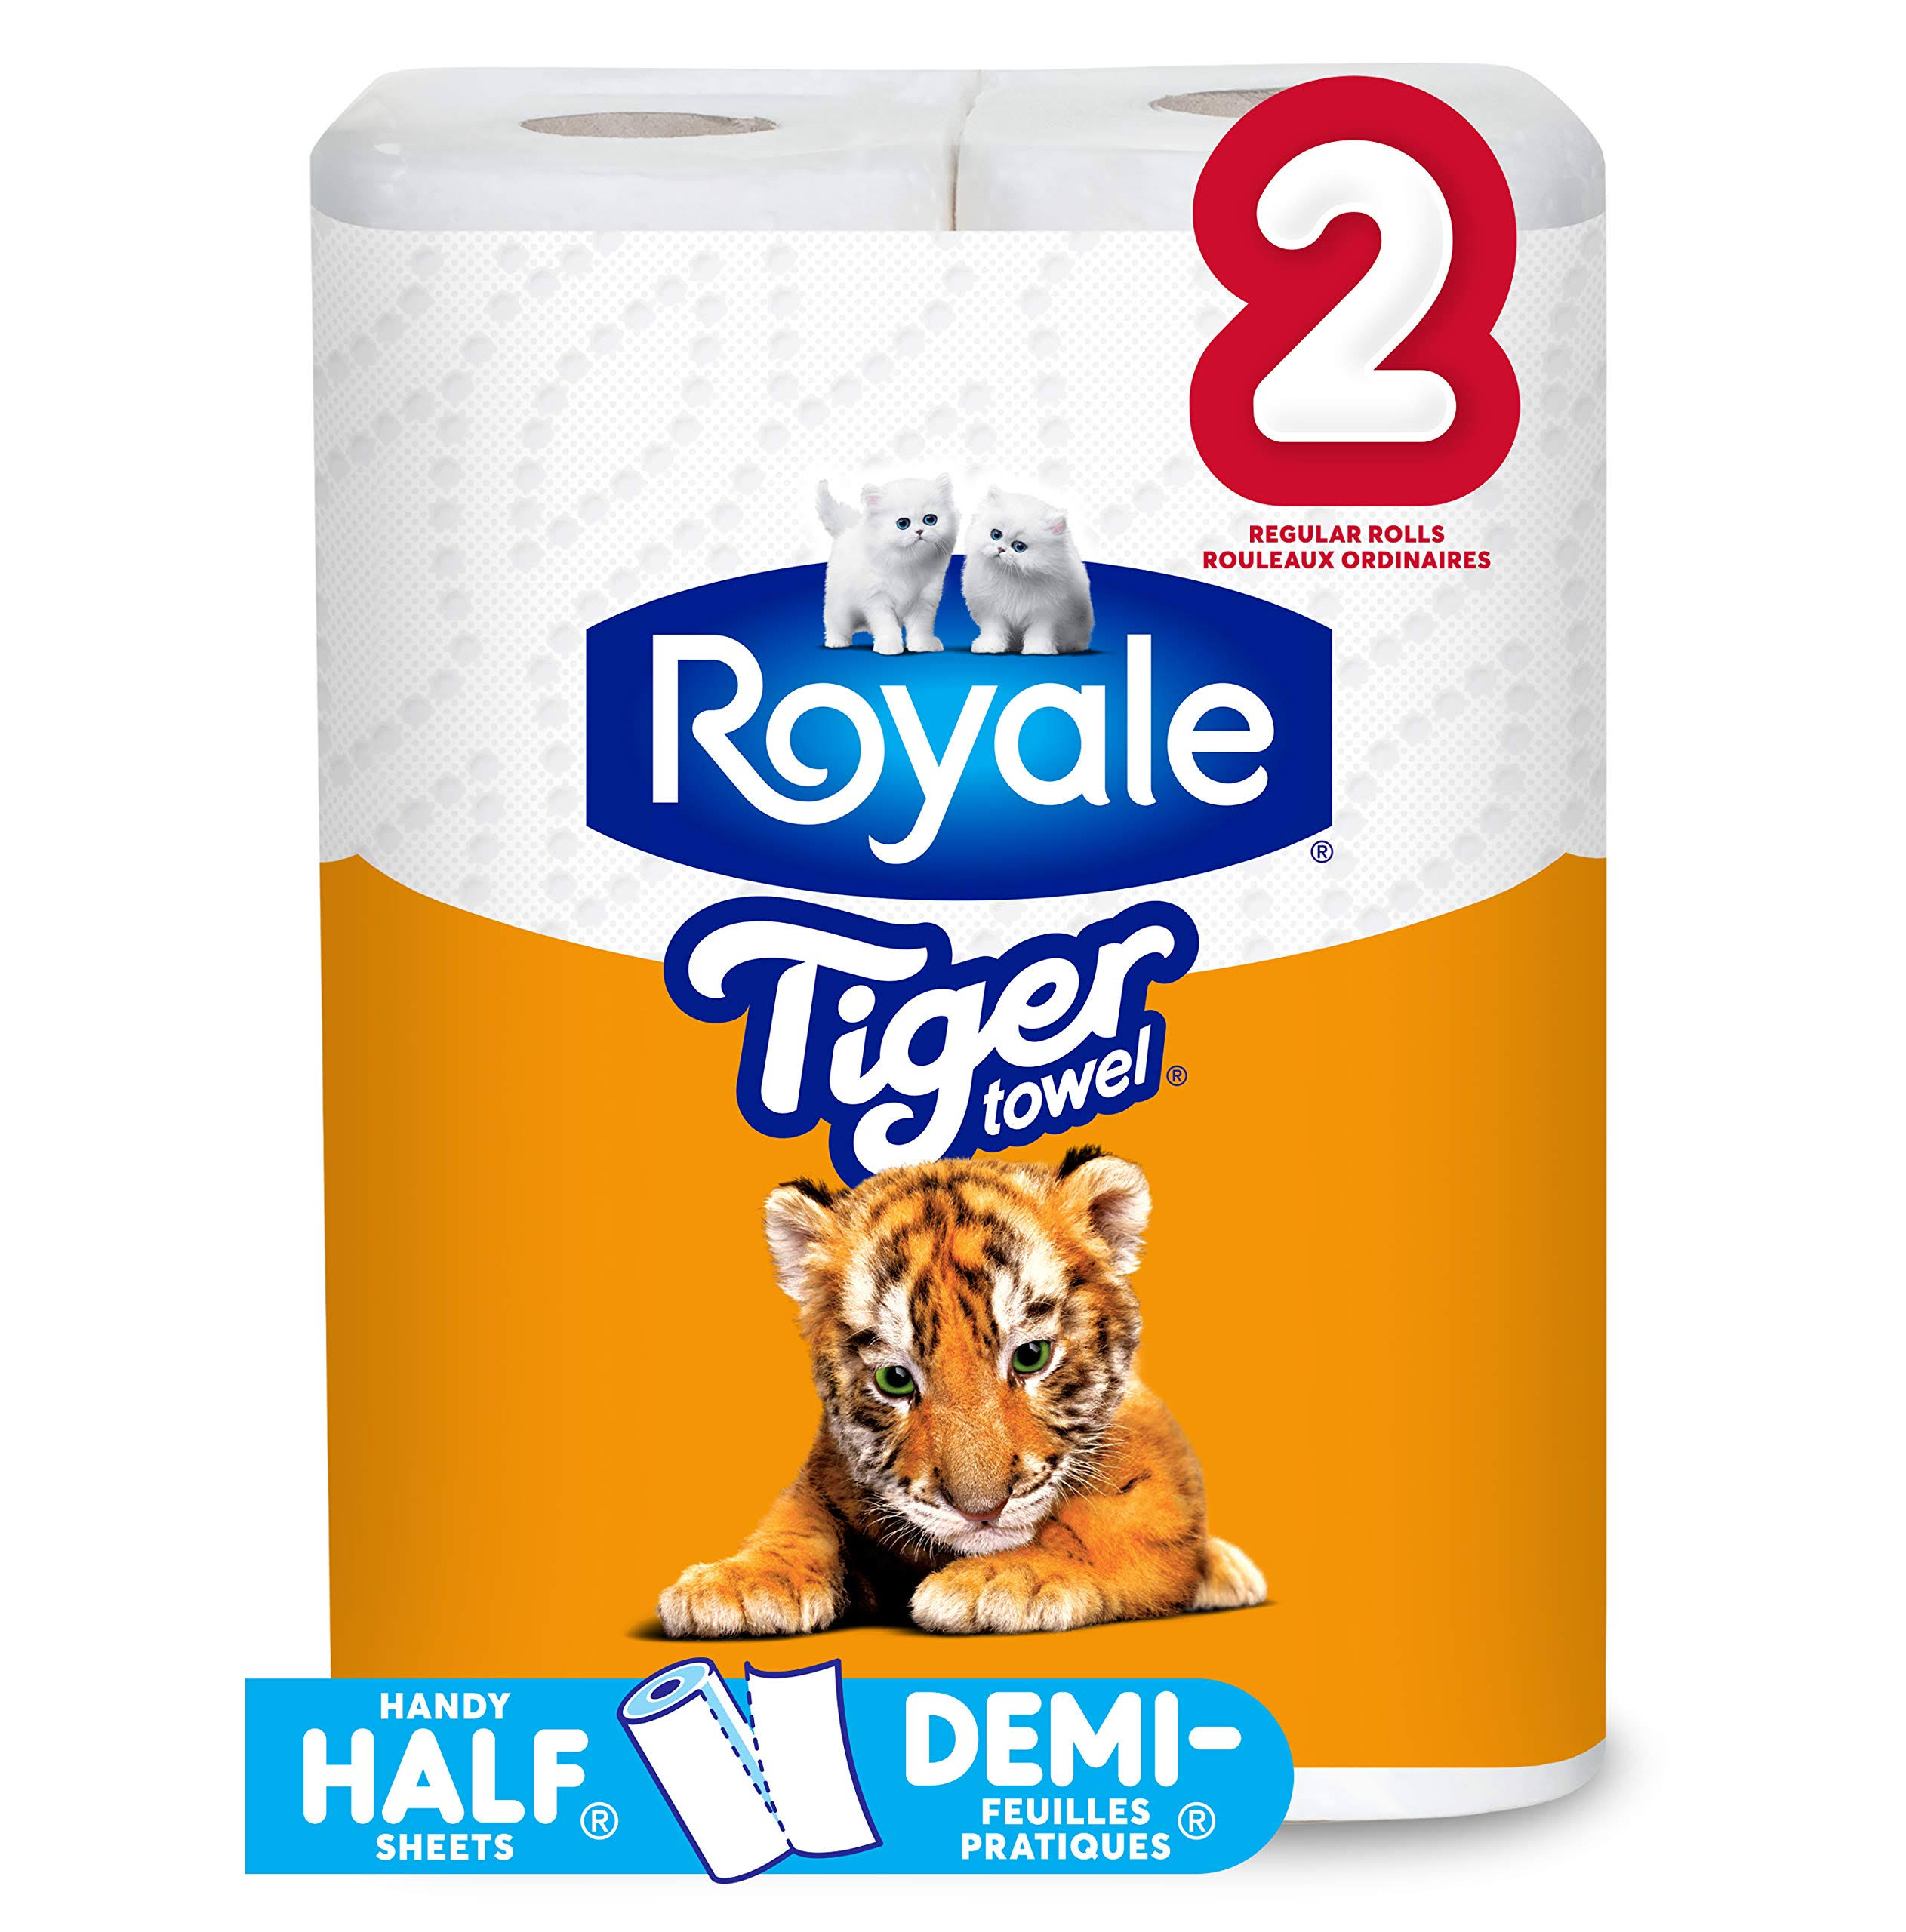 Royale Tiger Strong Paper Towel, 2 Regular Rolls, 2-Ply, 55 Handy Half Sheet Rolls